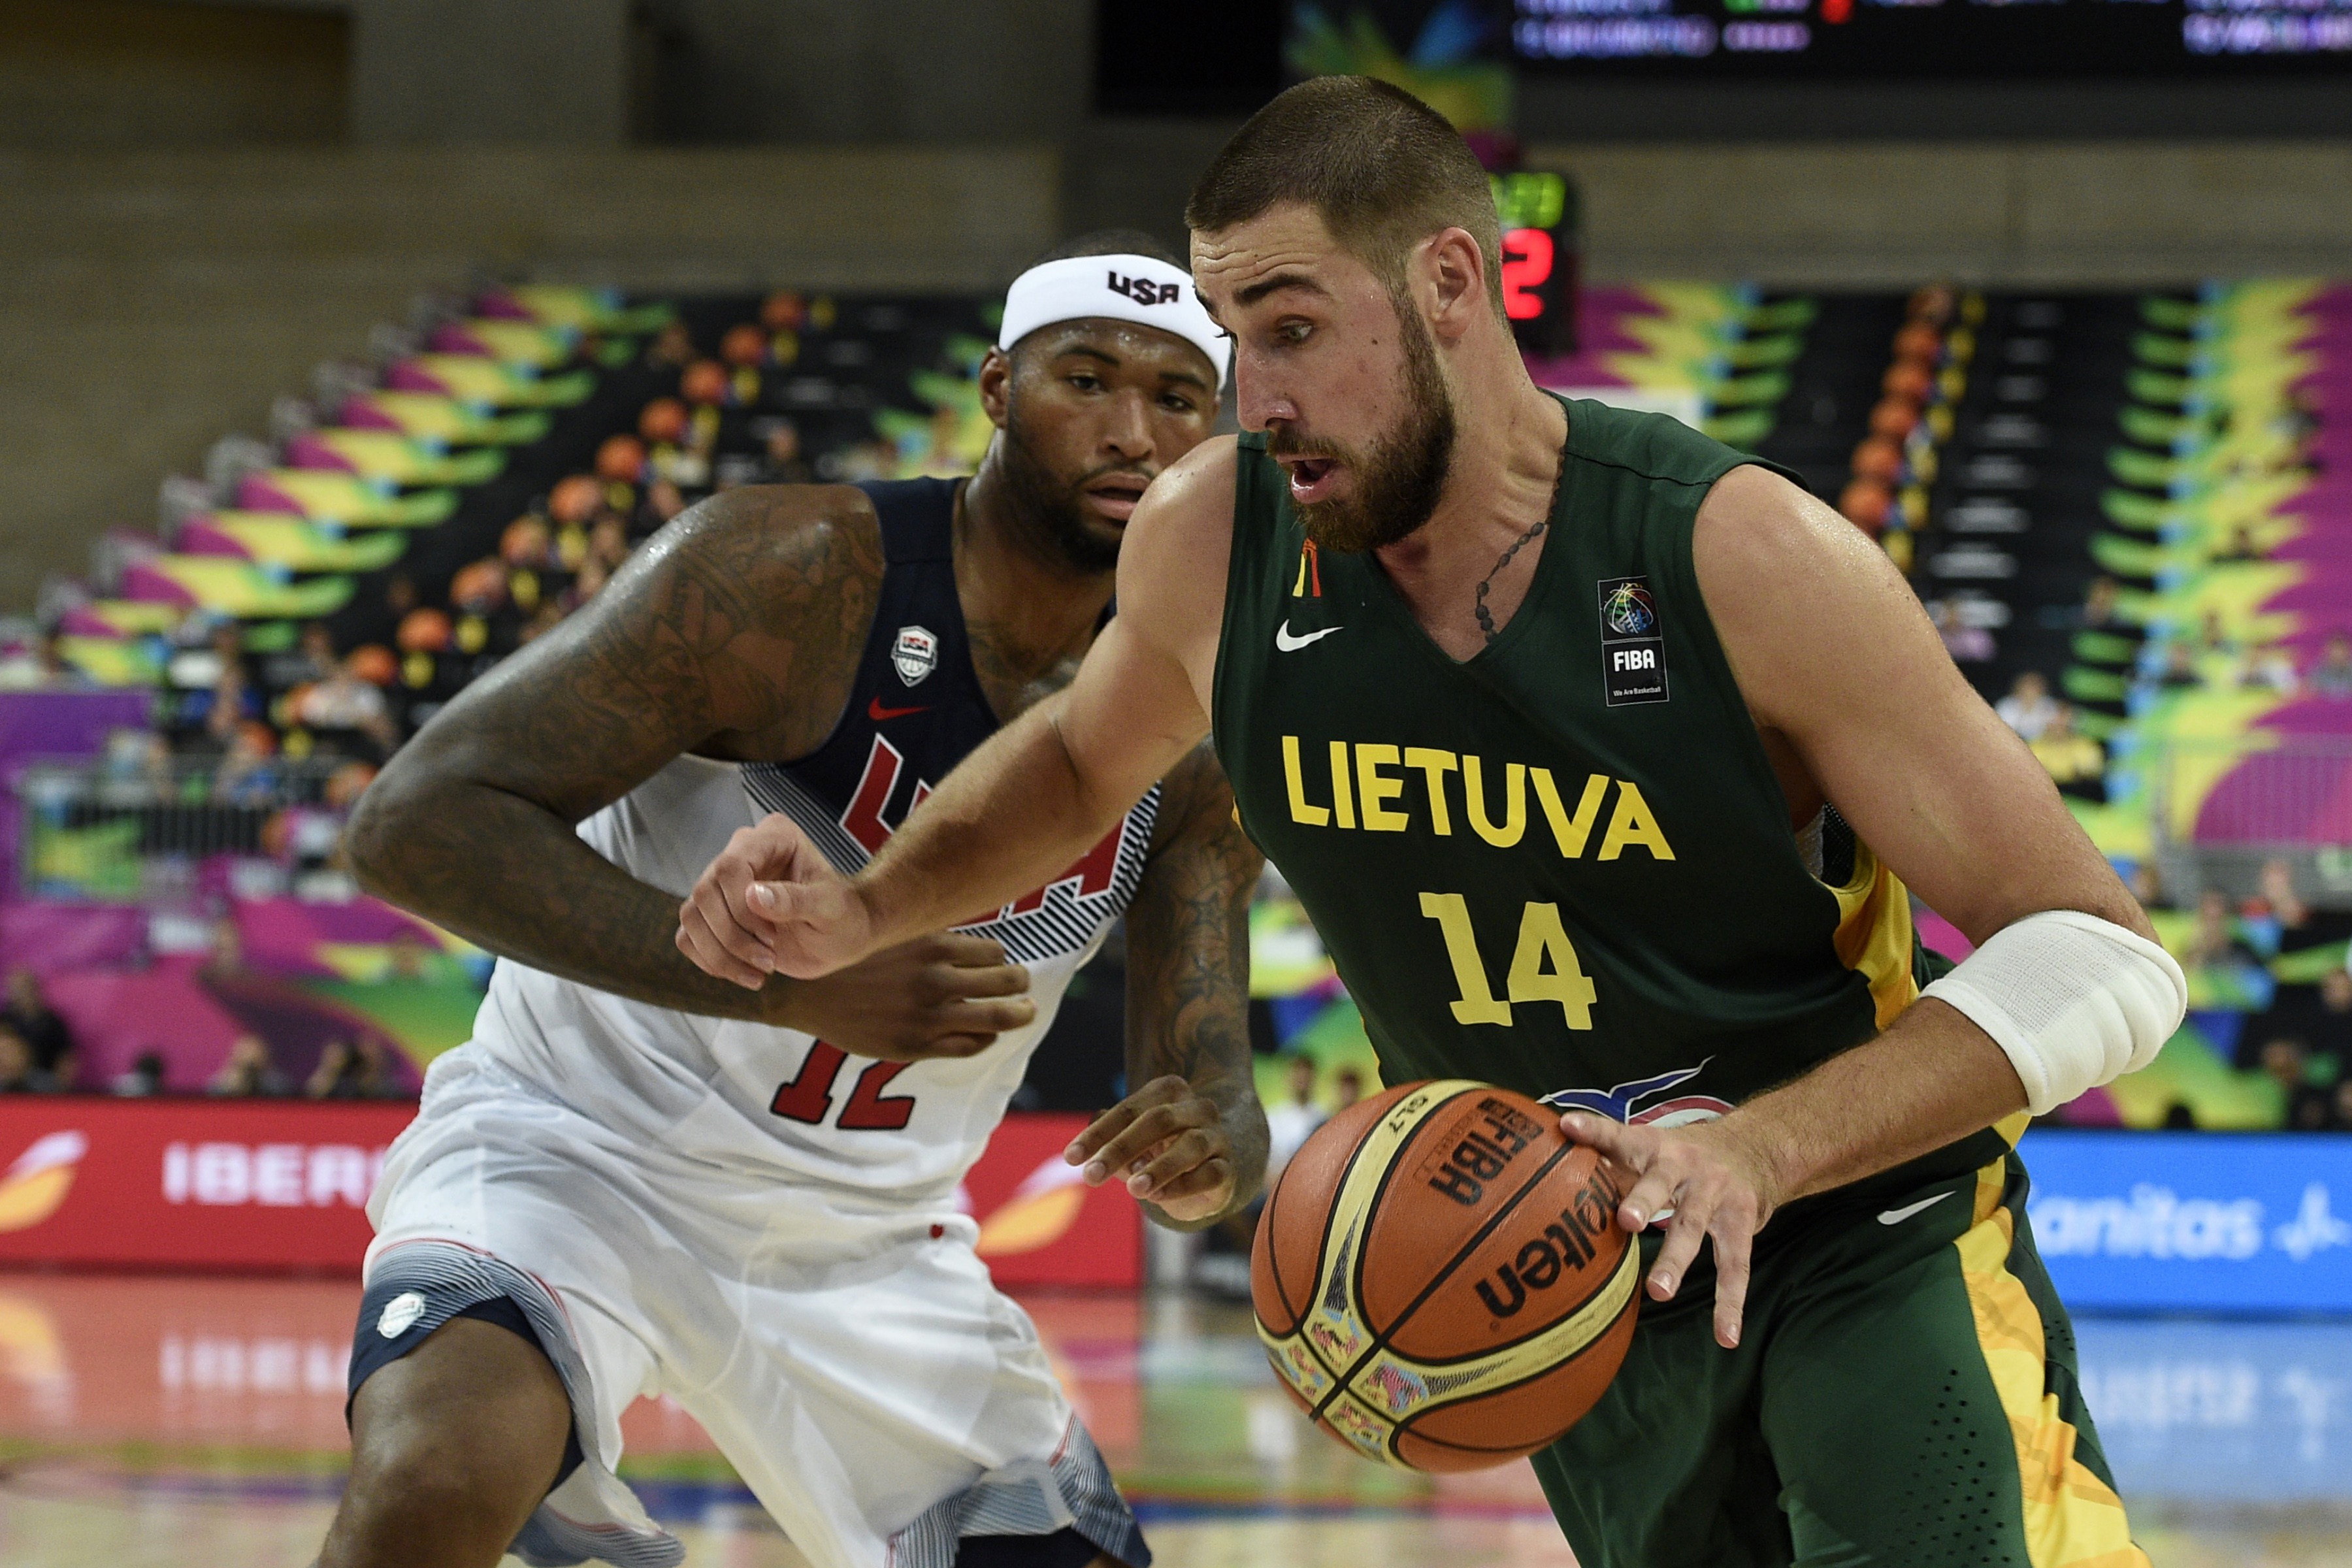 USA vs Lithuania Basketball Final Score, Video Highlights for 2014